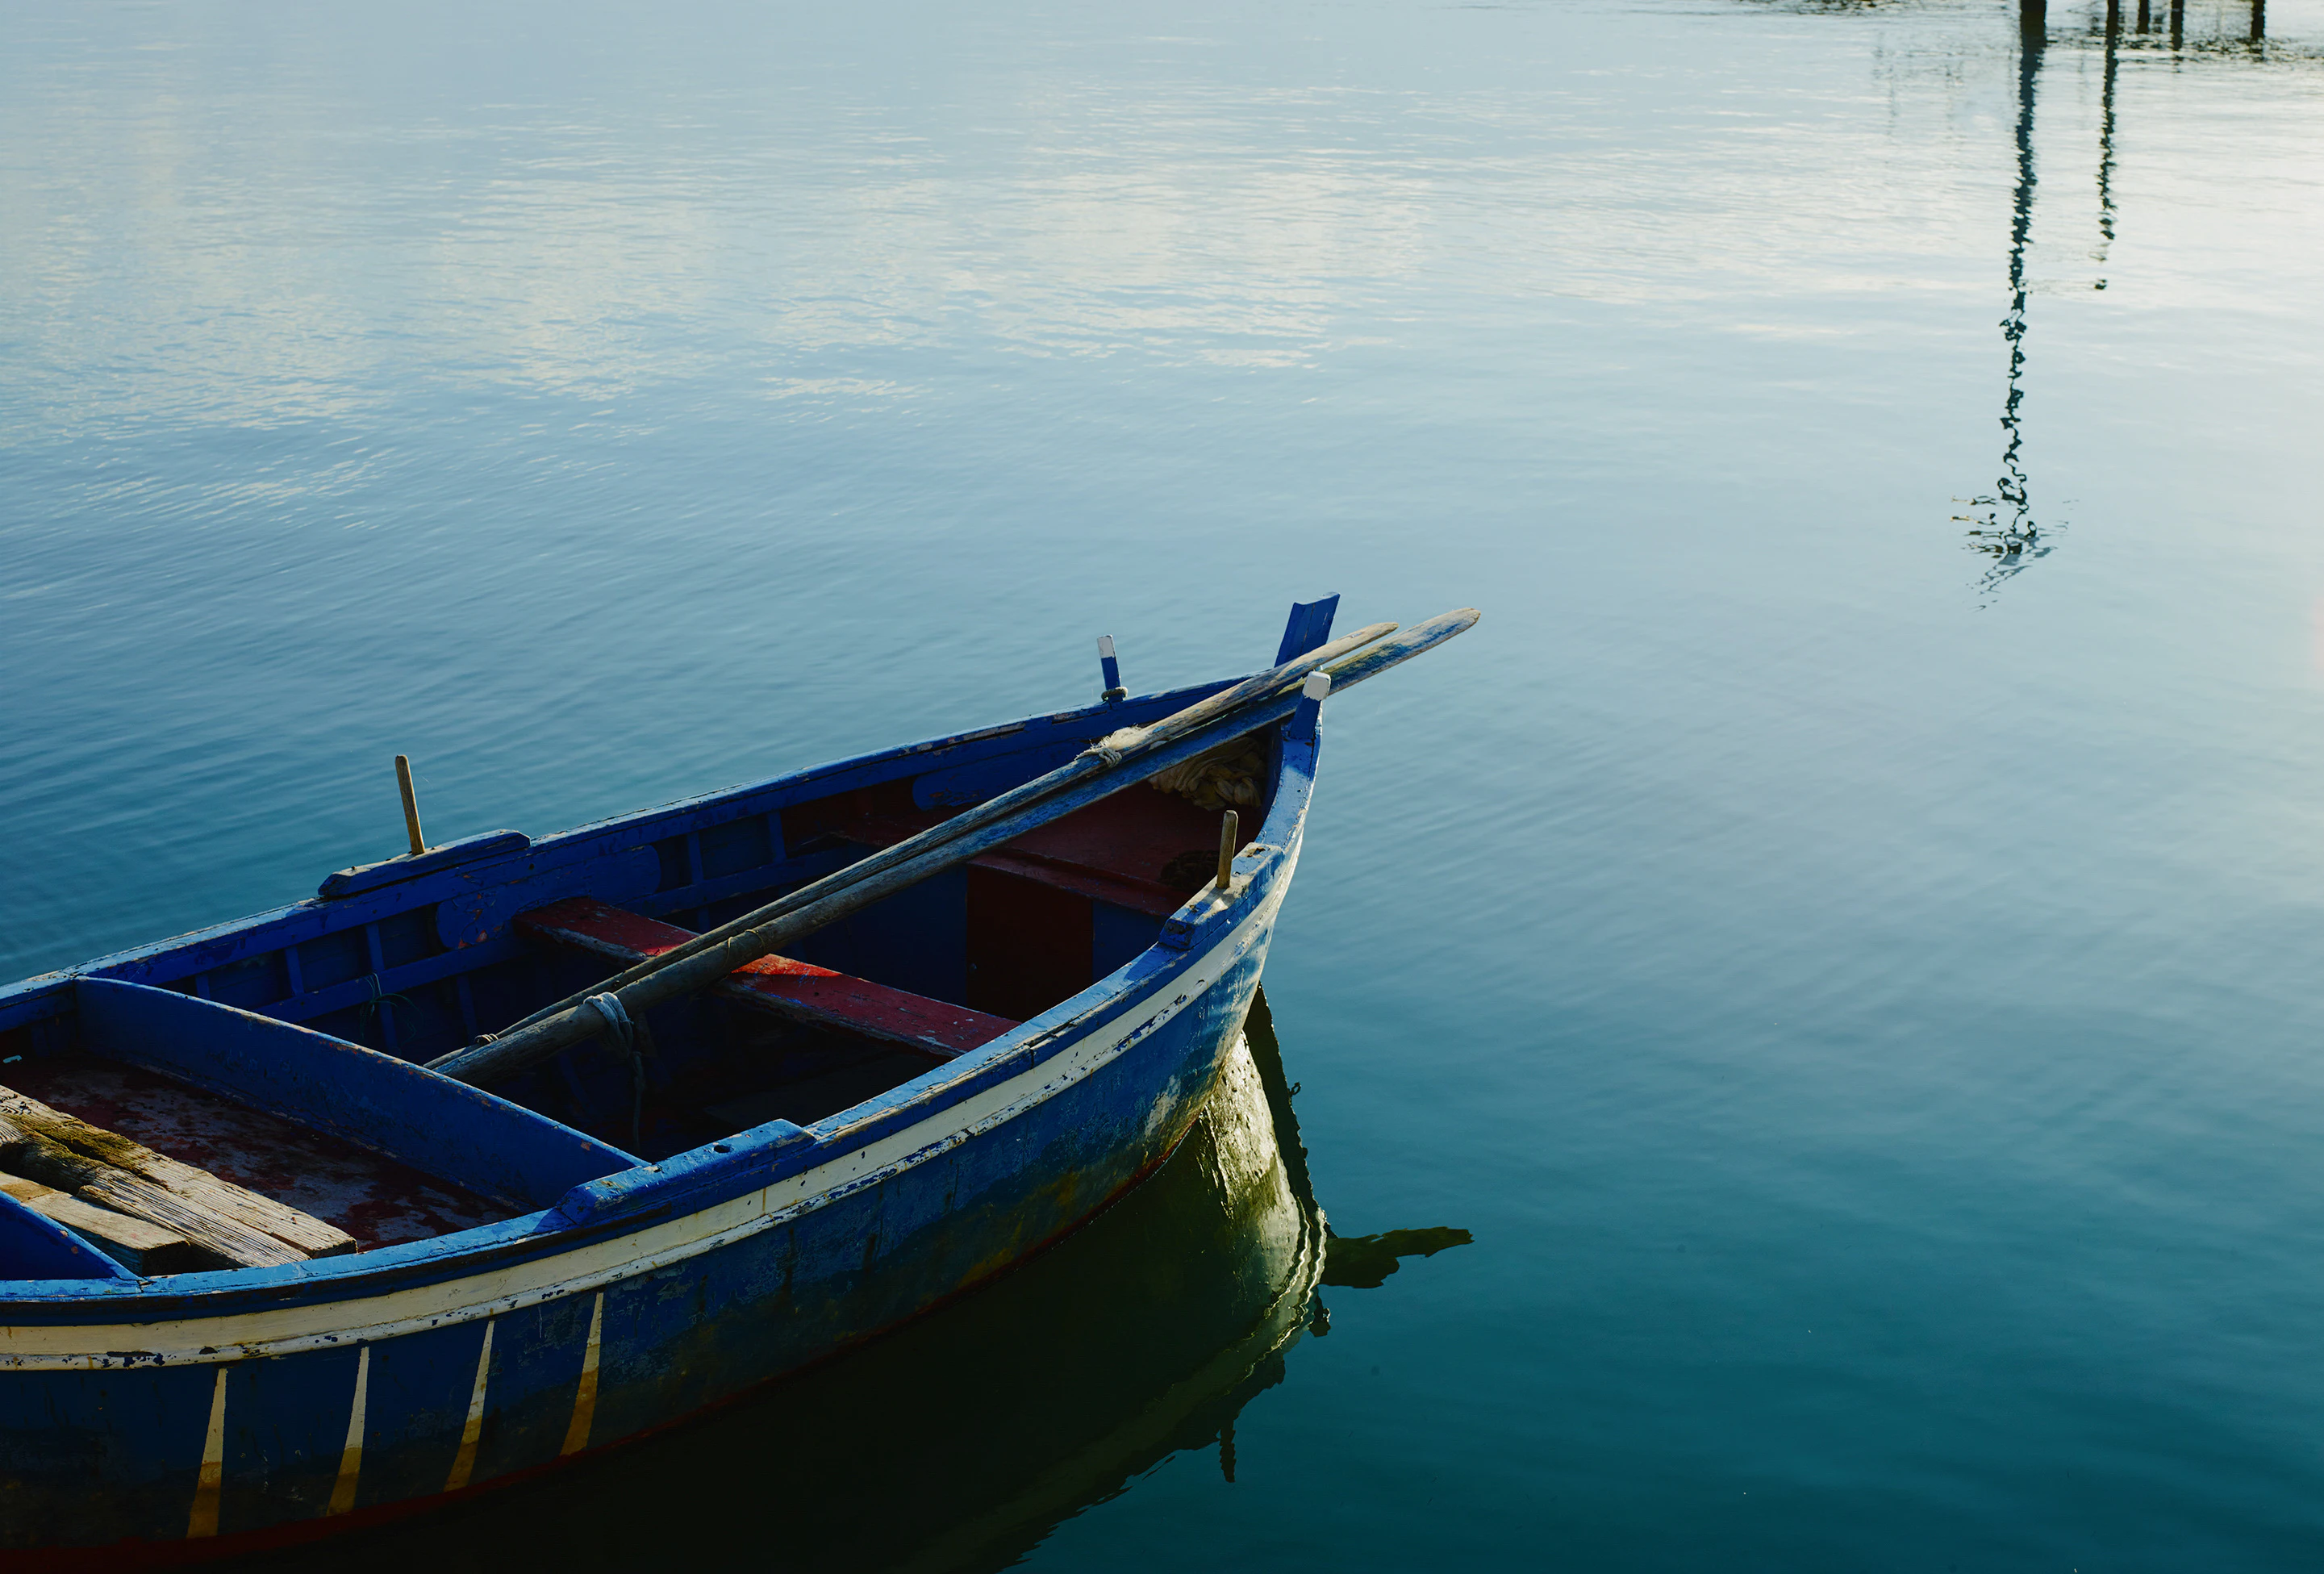 A blue rowing boat is in a still body of water.